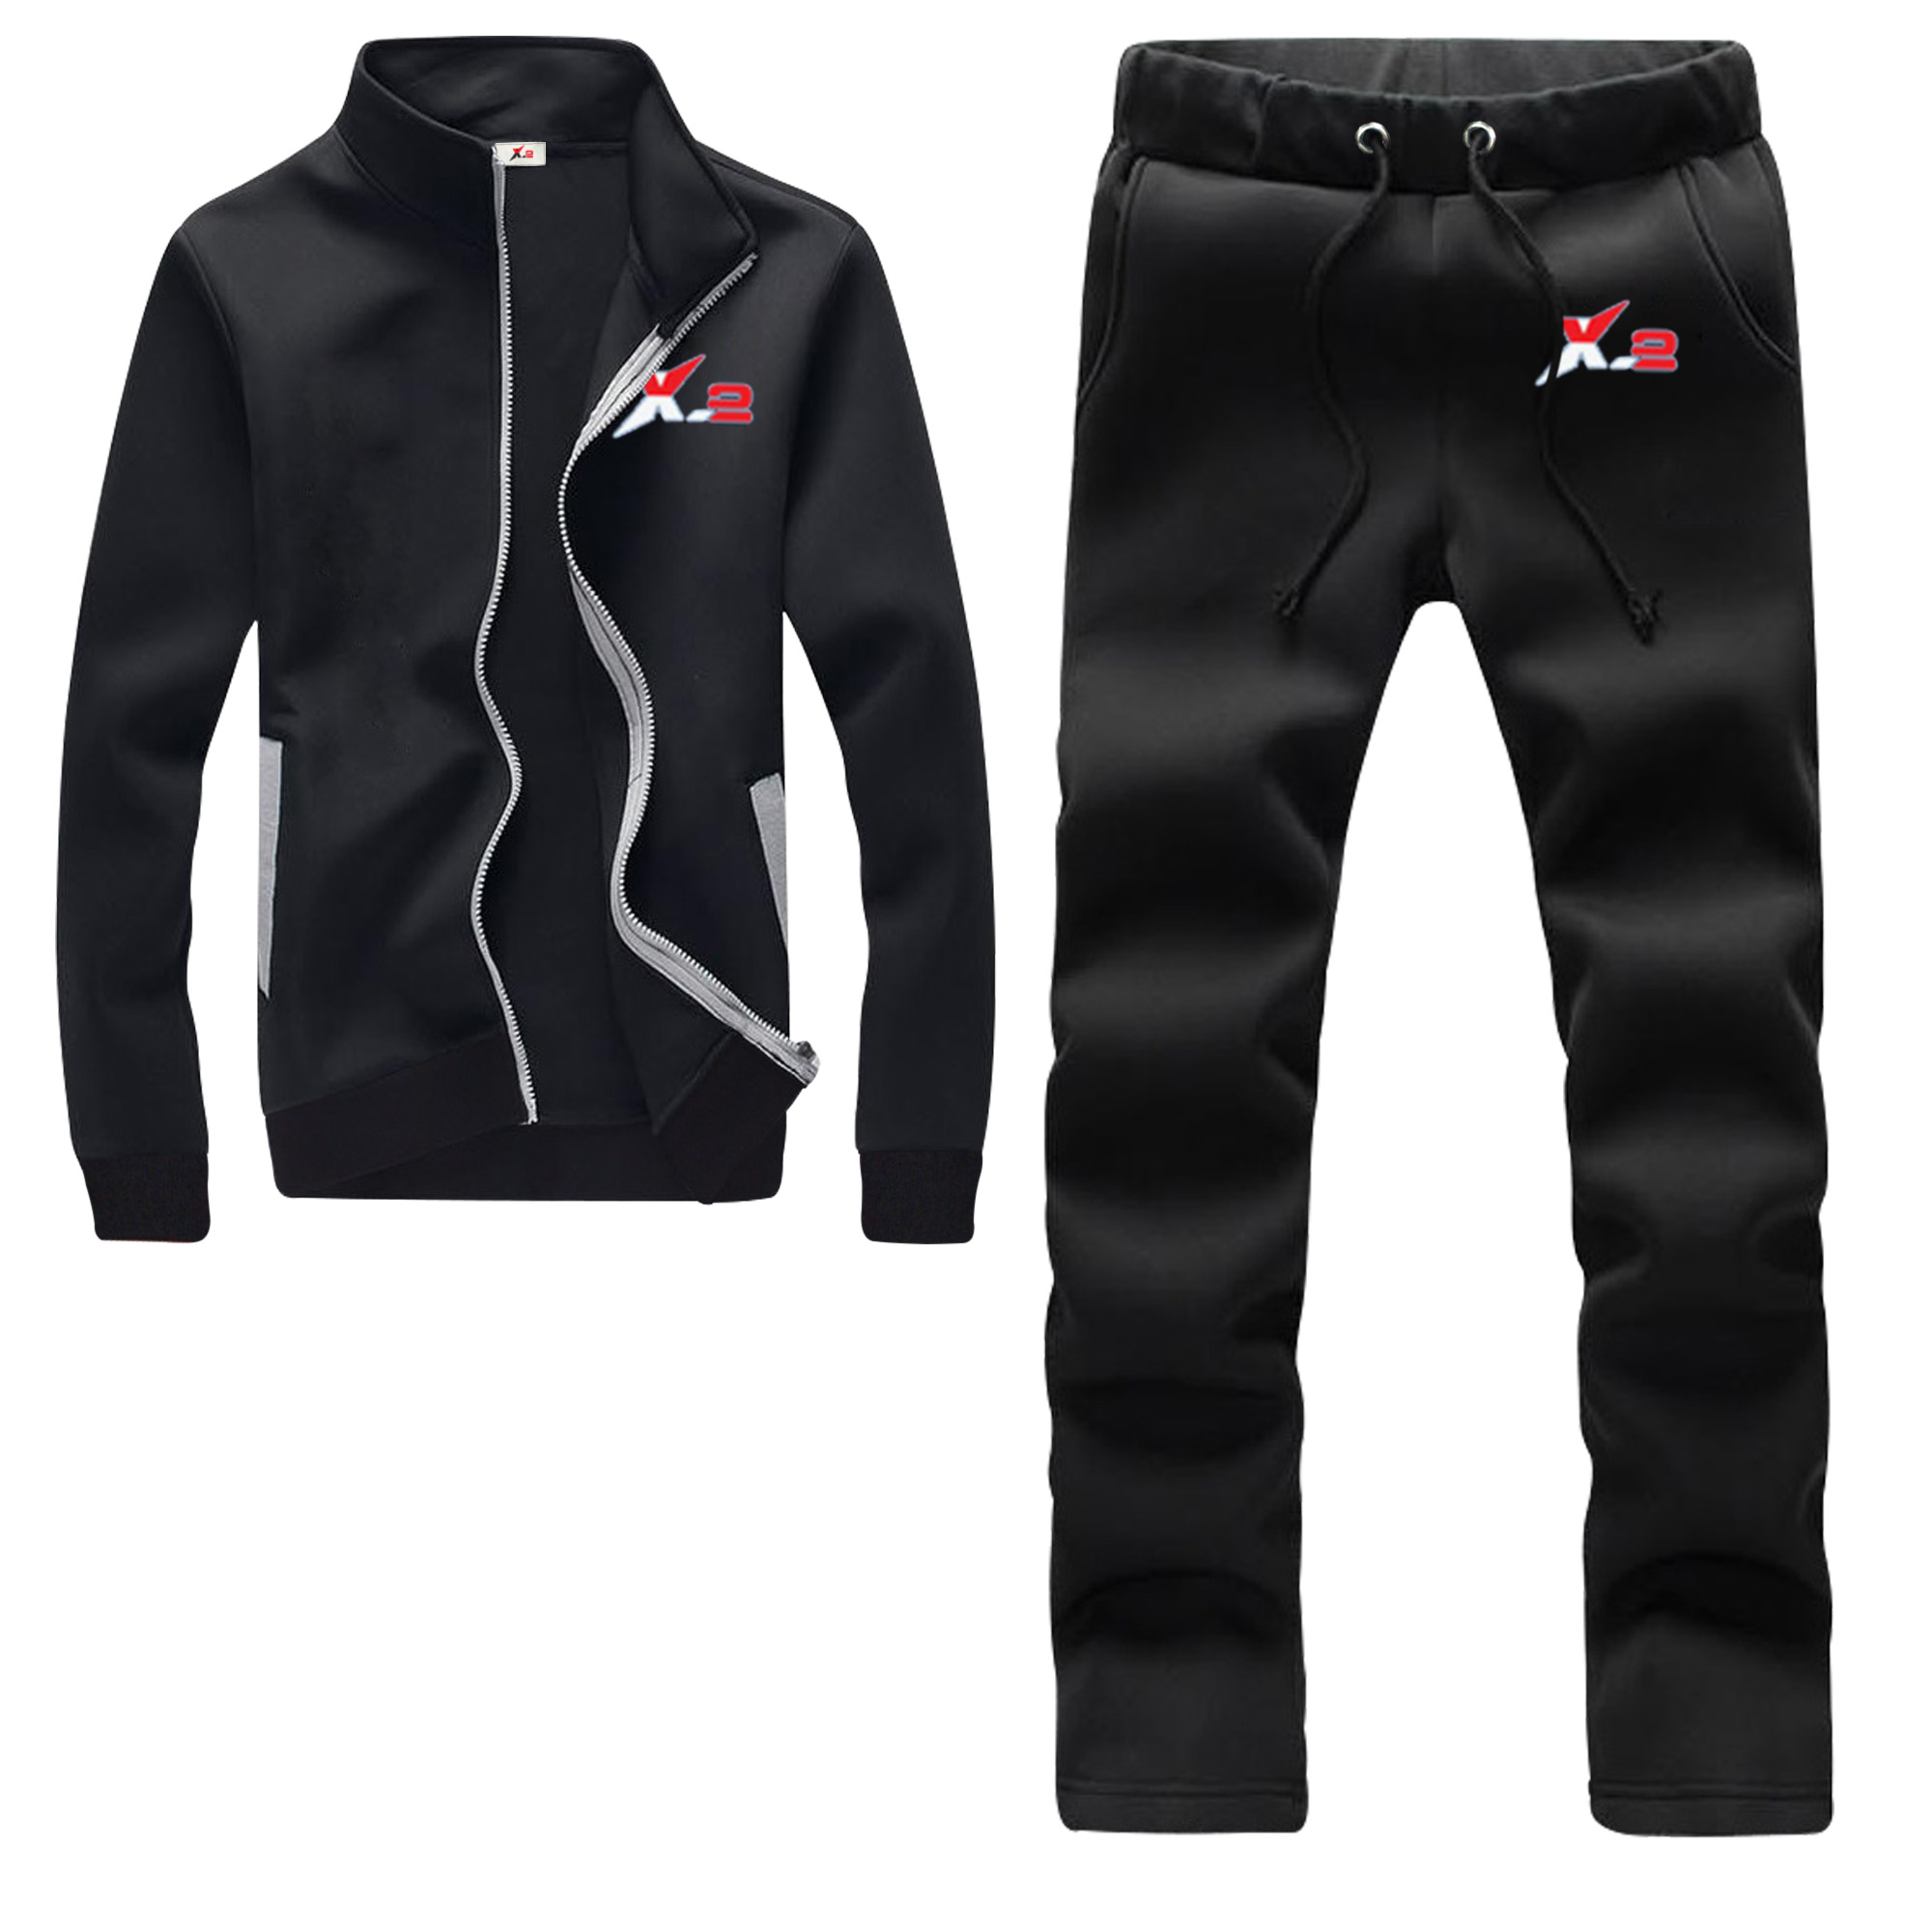 Athletic Full Zip Fleece Tracksuit Jogging Sweatsuit Activewear Black Large - image 1 of 2